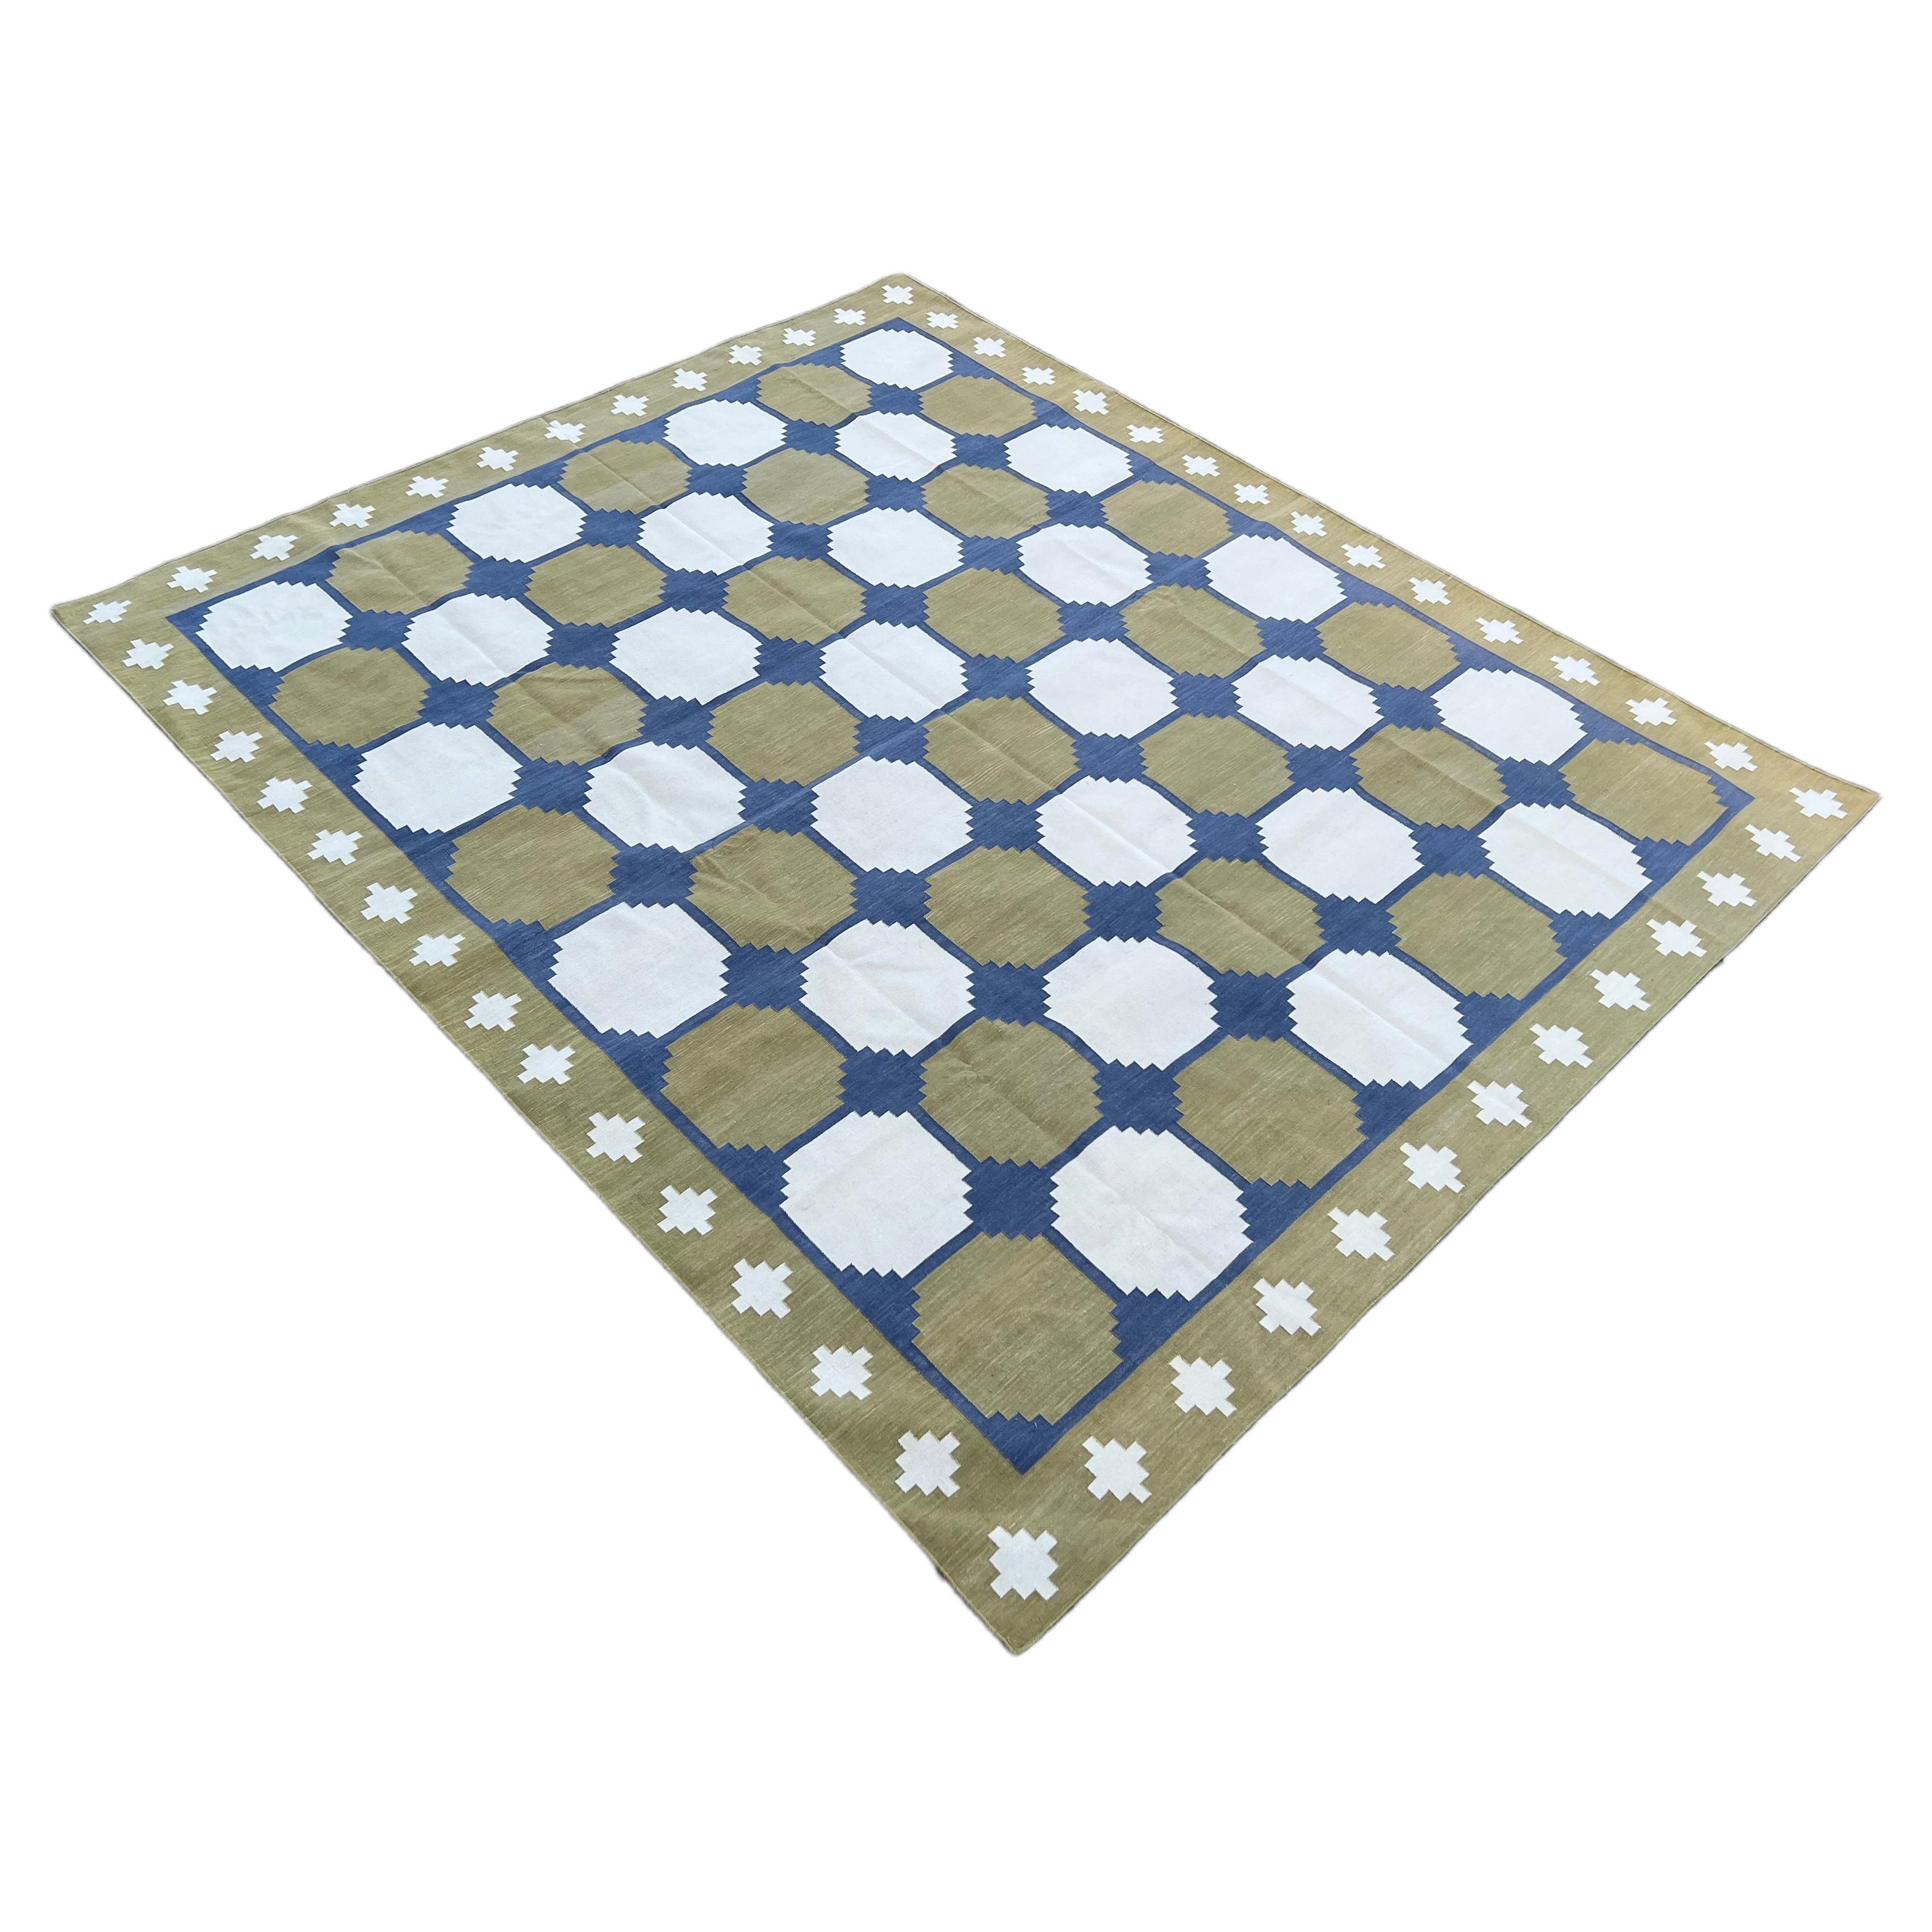 Handmade Cotton Area Flat Weave Rug, Green & Blue Geometric Tile Indian Dhurrie